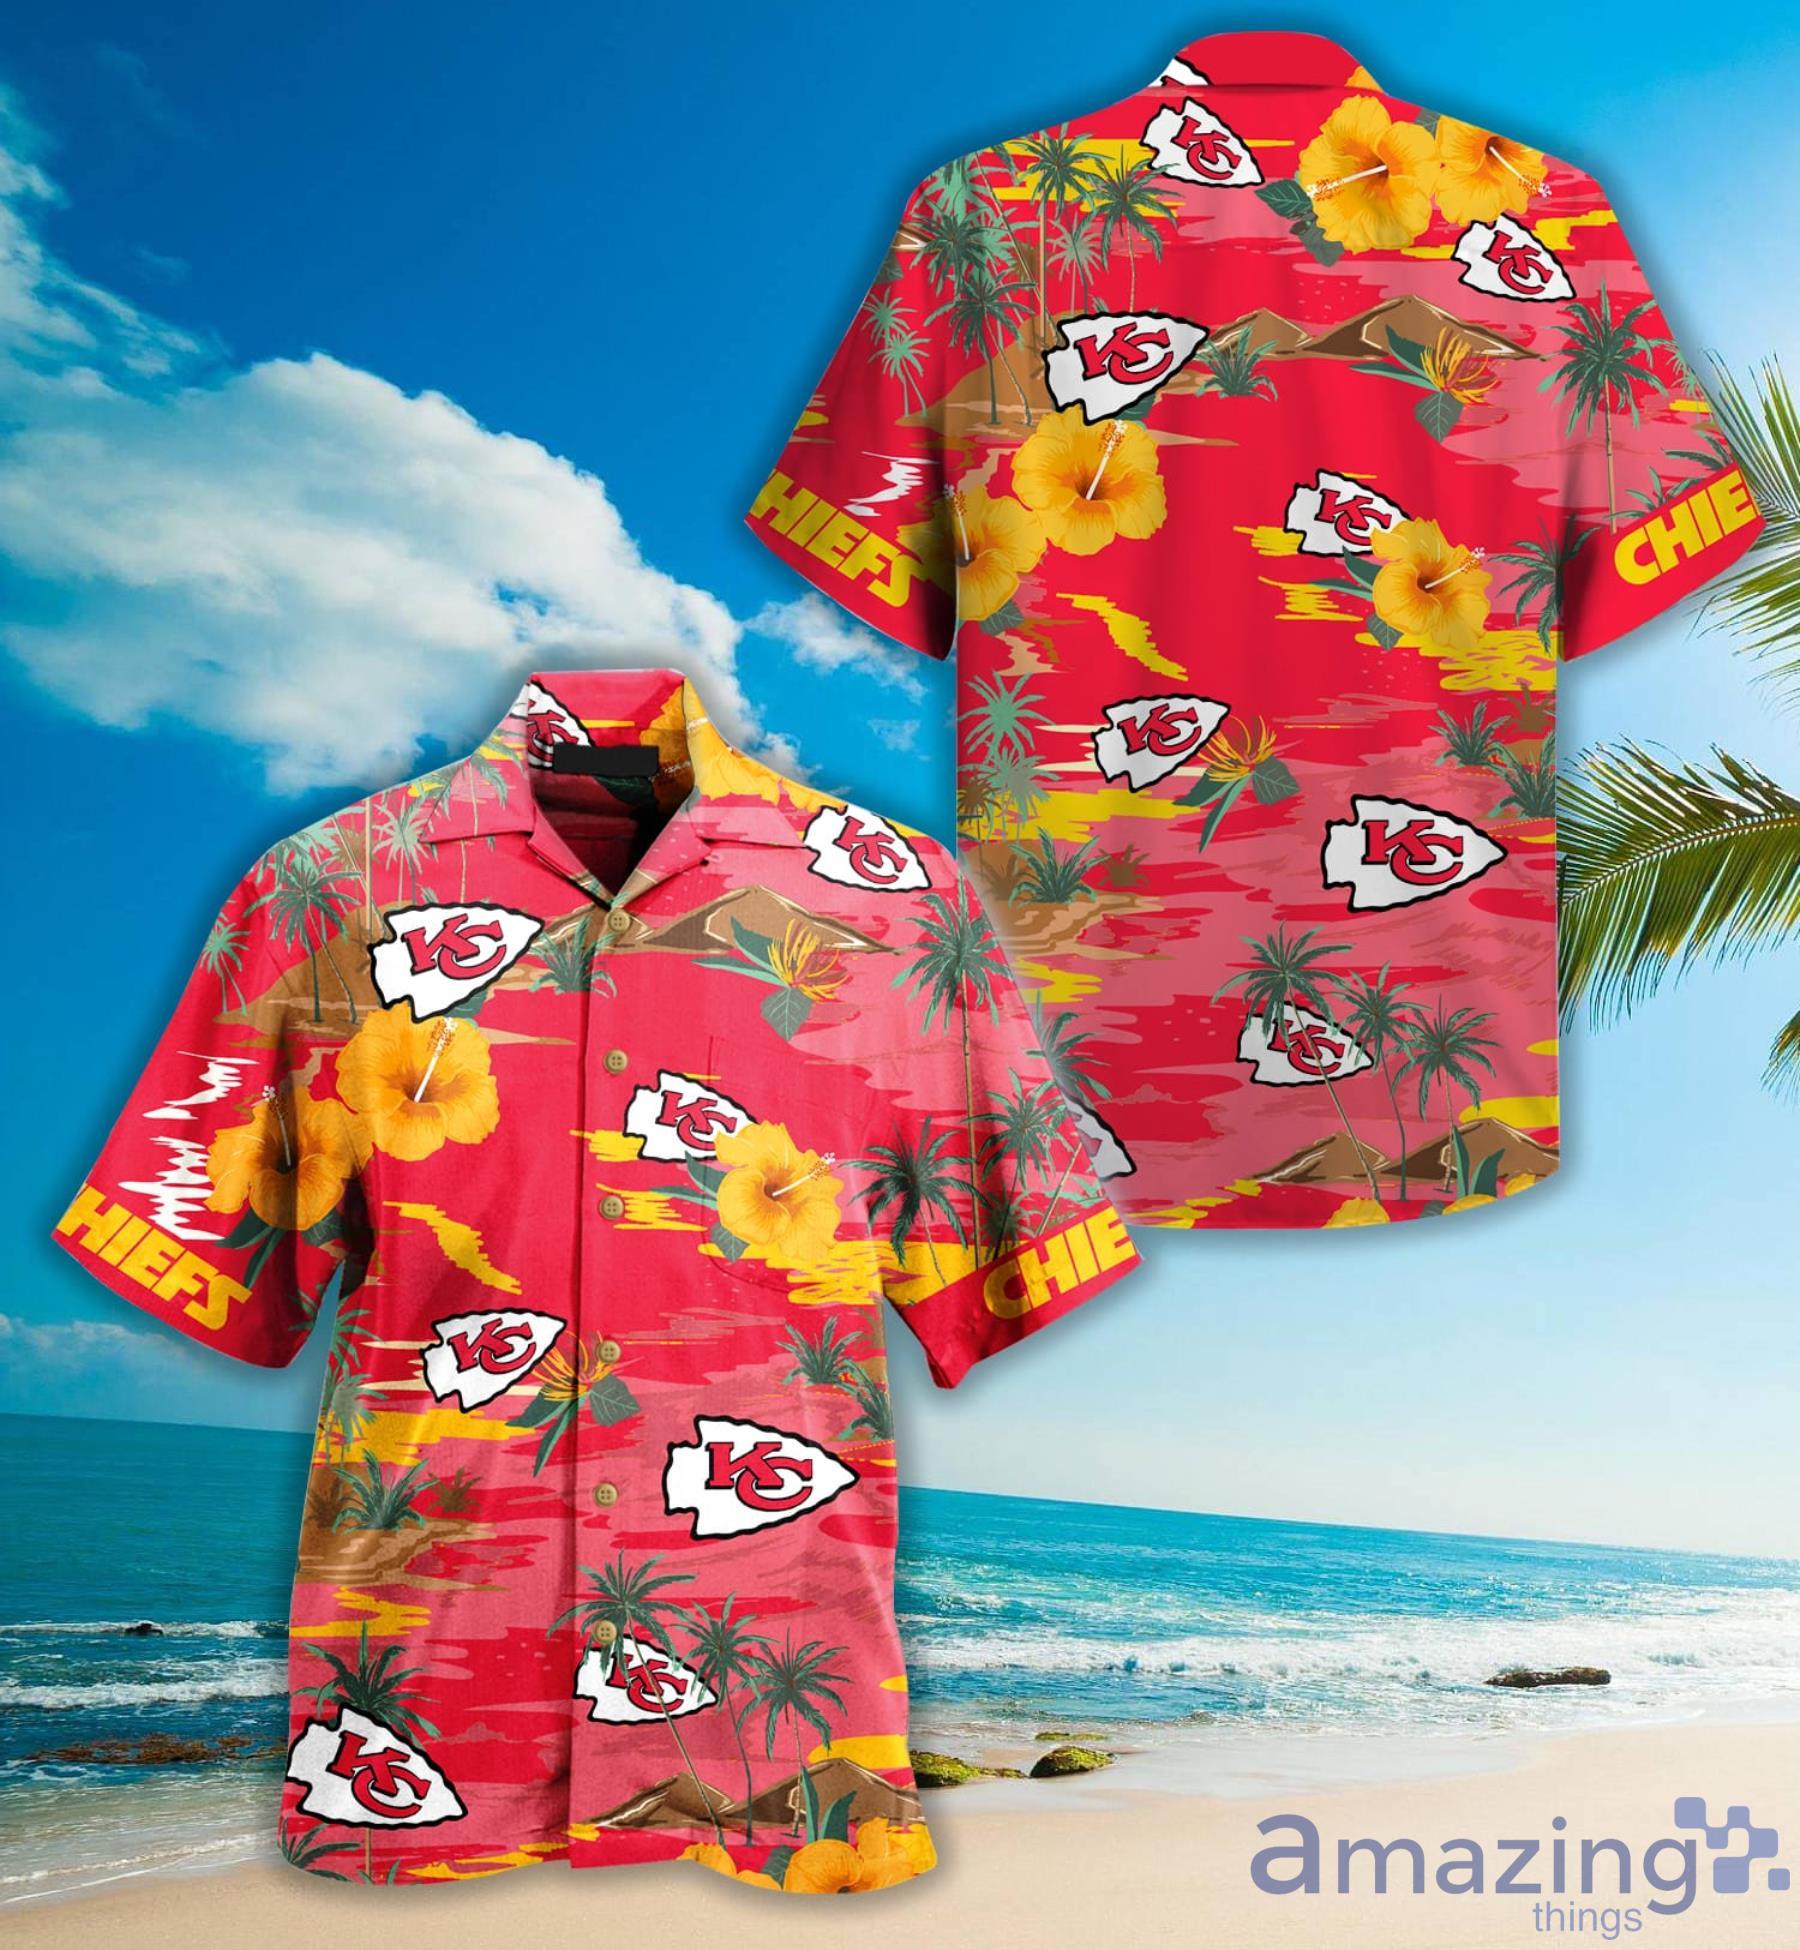 Kanas City Chiefs Sea Palm Flower Hawaiian Shirt For Fans